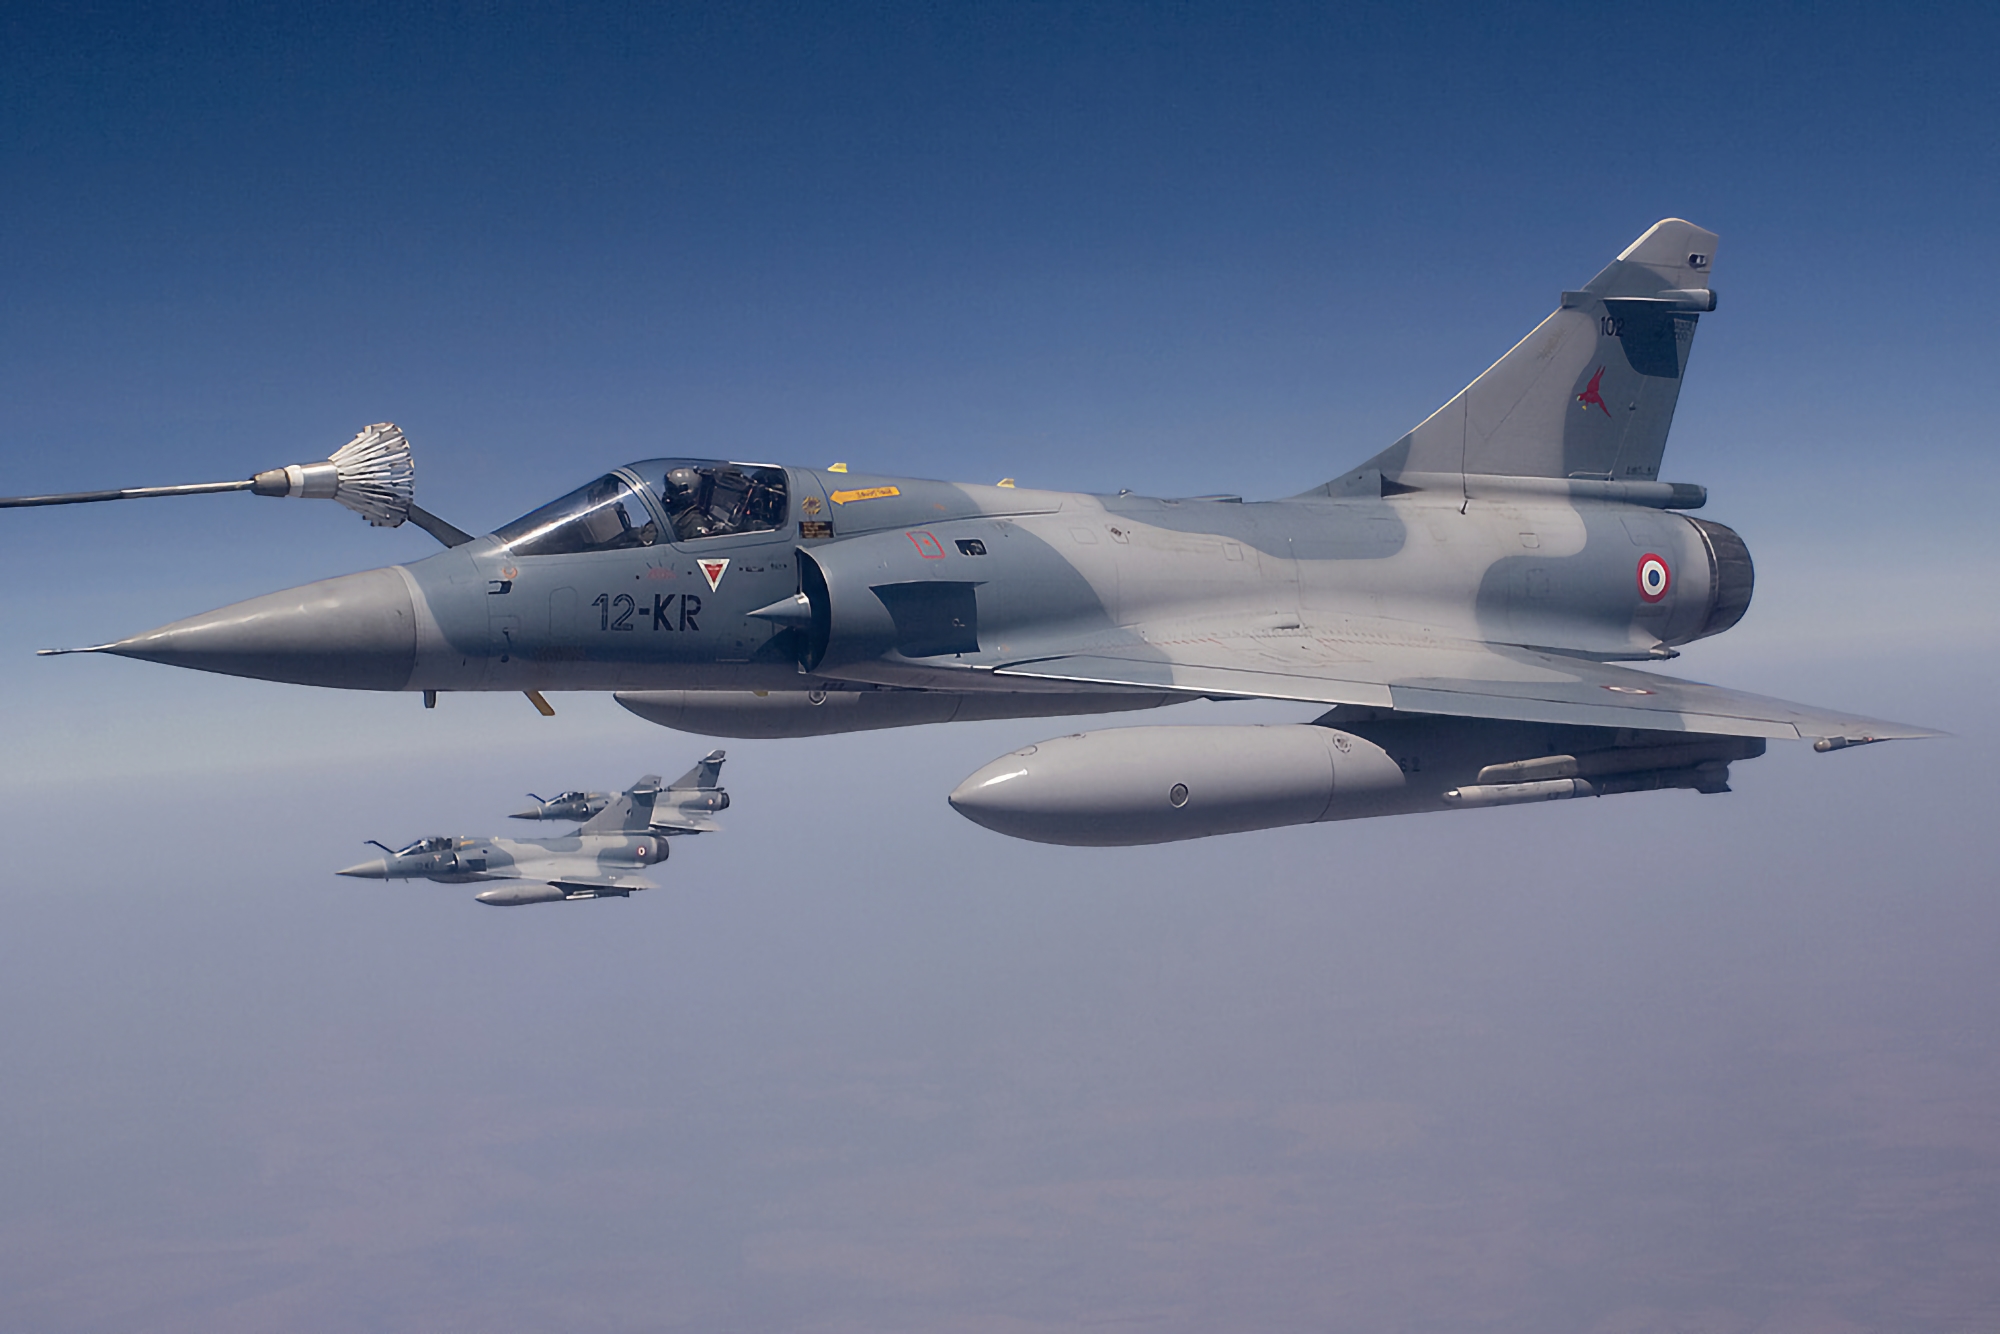 France considers transferring Dassault Mirage 2000 fighter jets to Ukraine